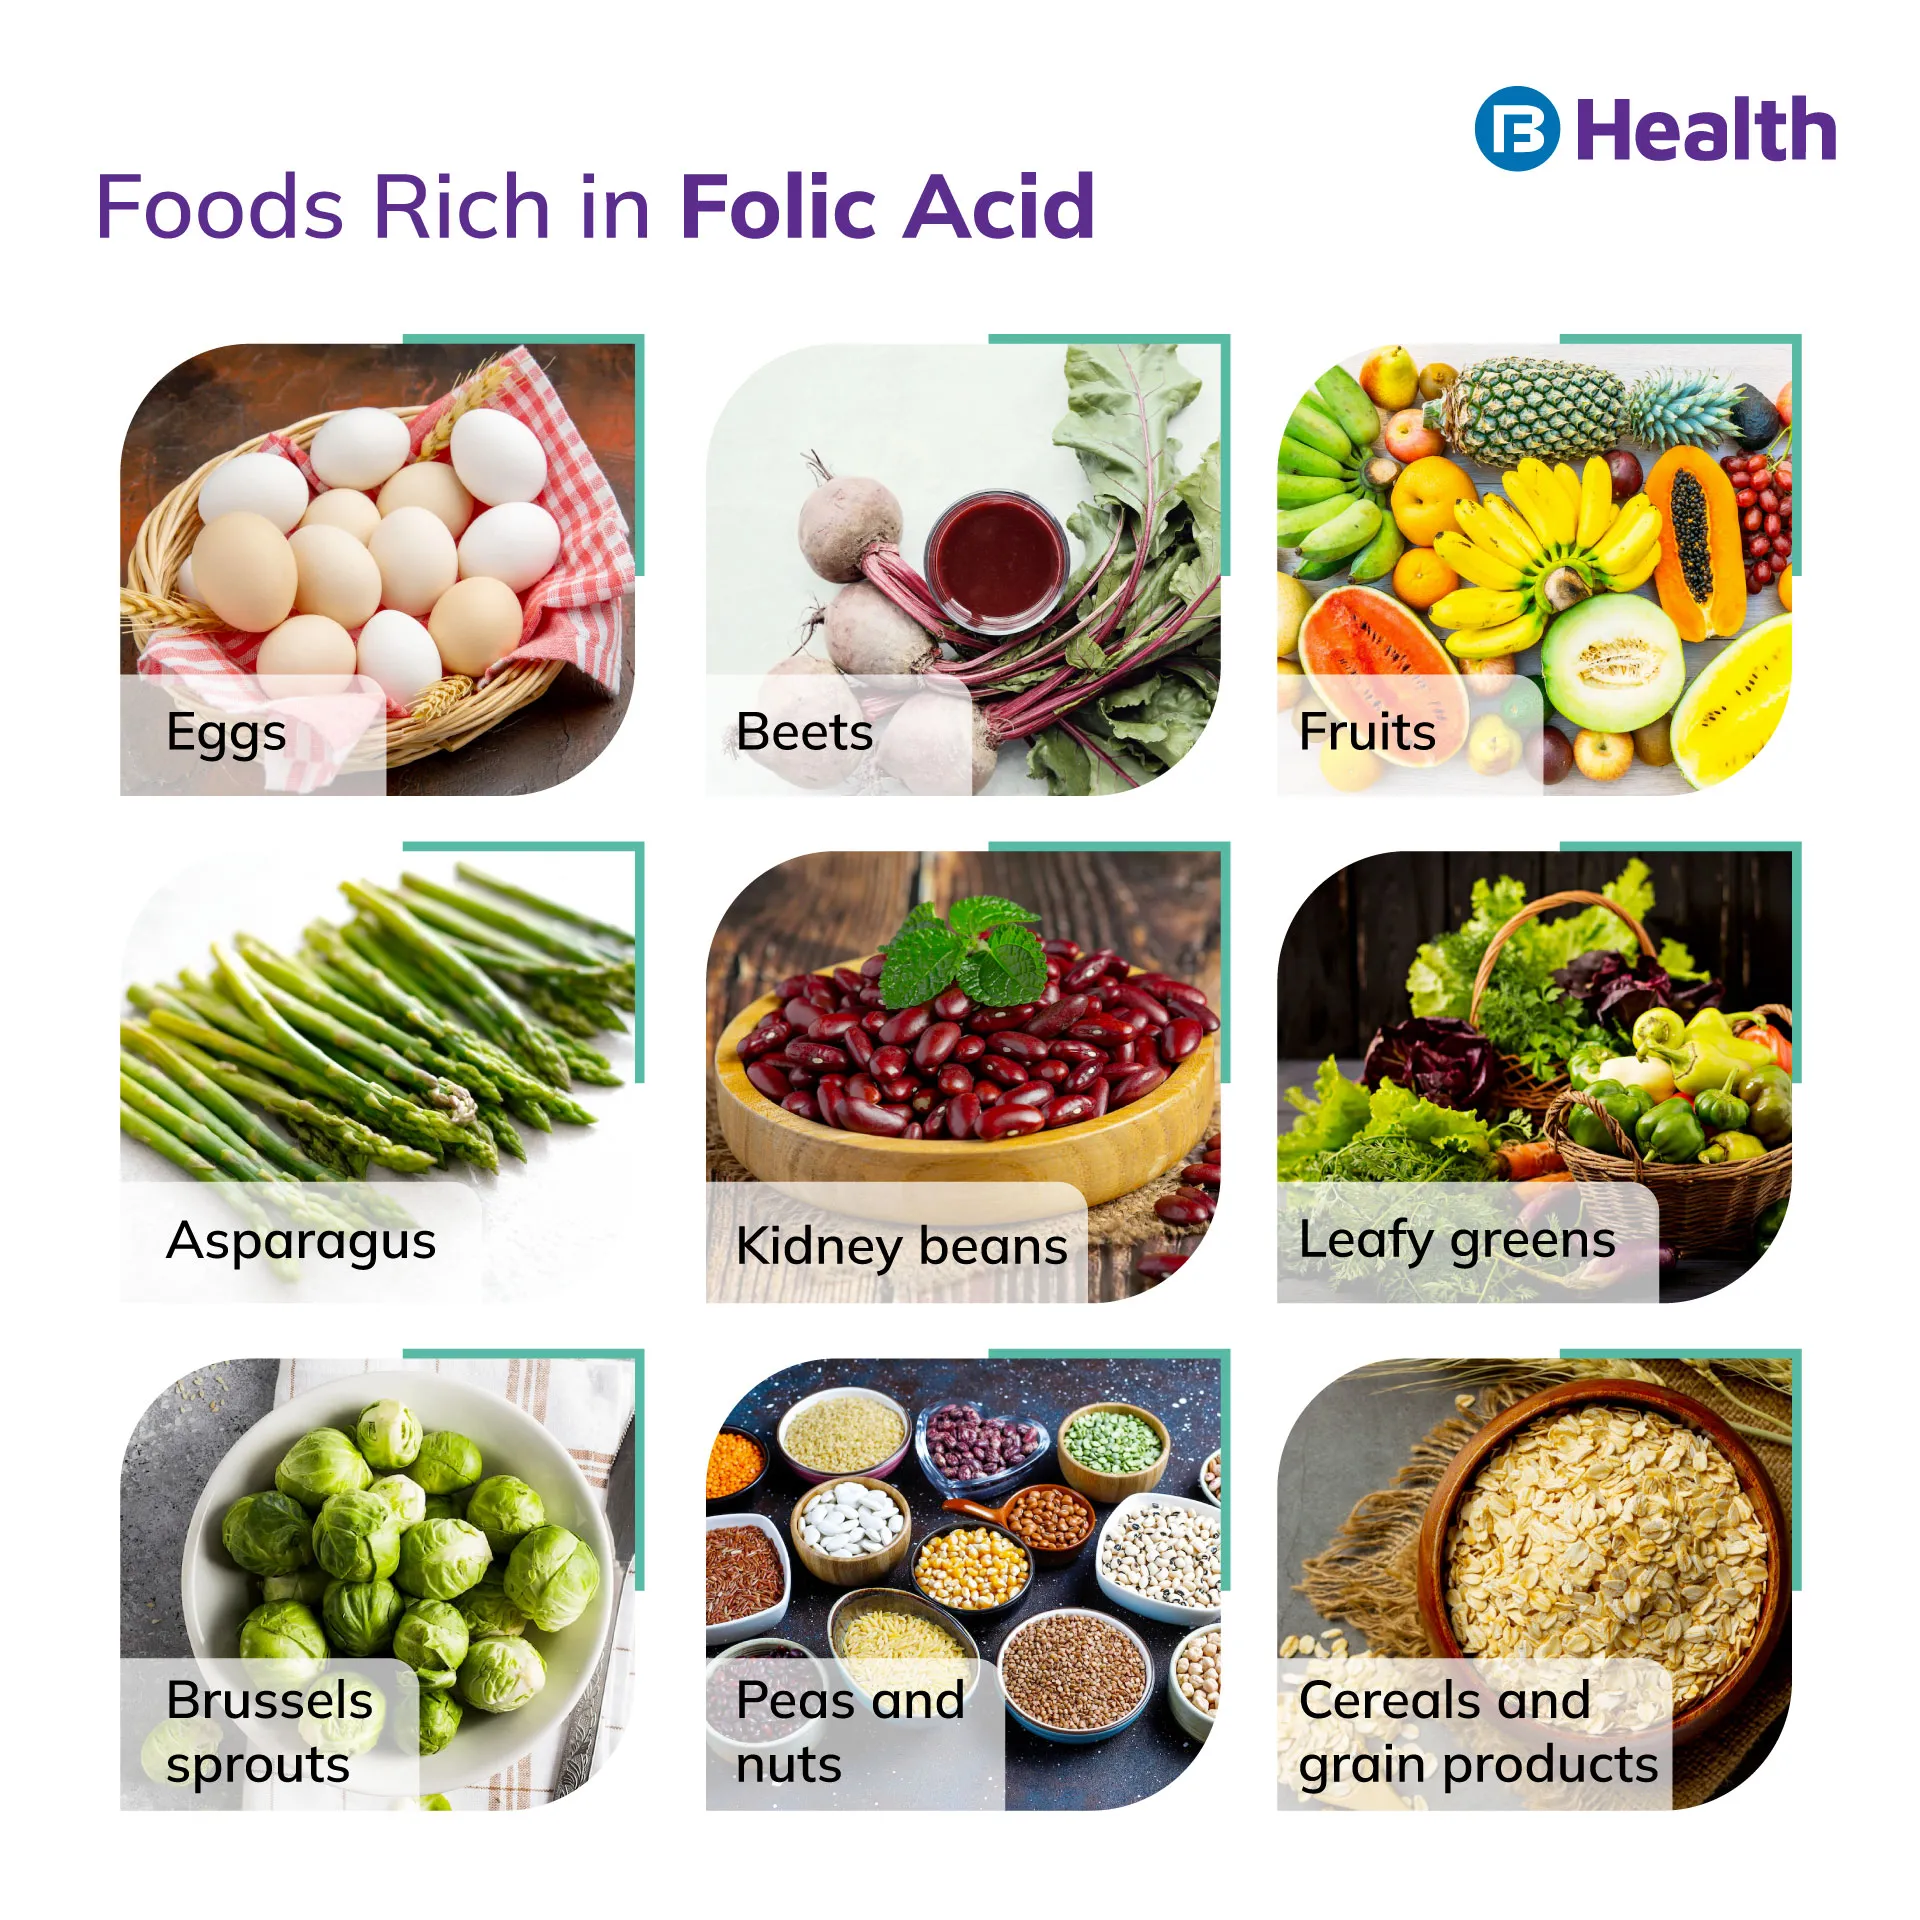 Folic Acid rich foods